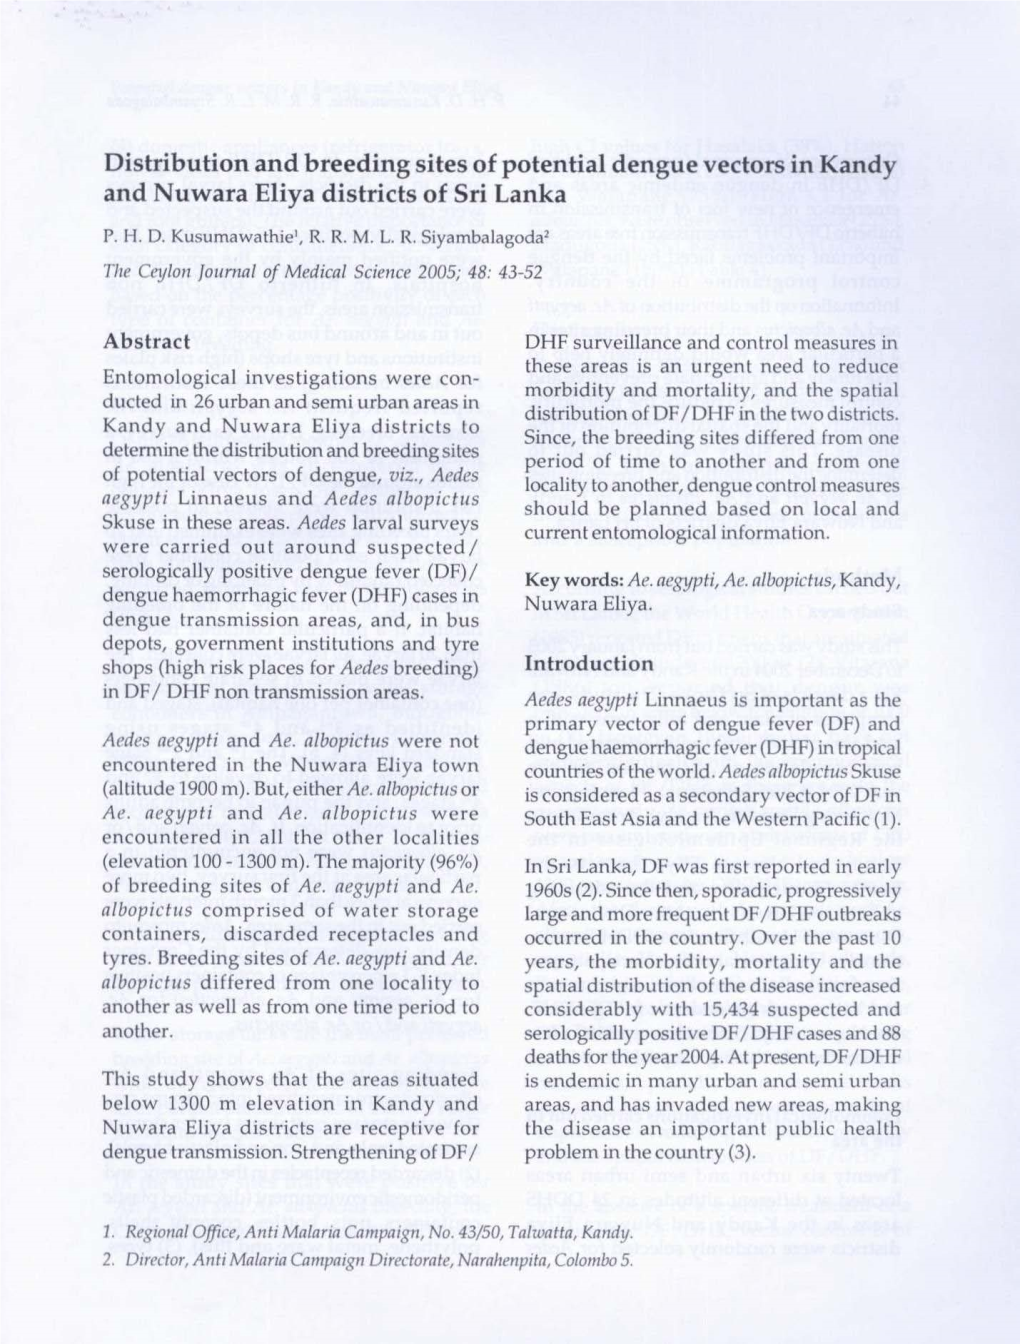 Distribution and Breeding Sites of Potential Dengue Vectors in Kandy and Nuwara Eliya Districts of Sri Lanka